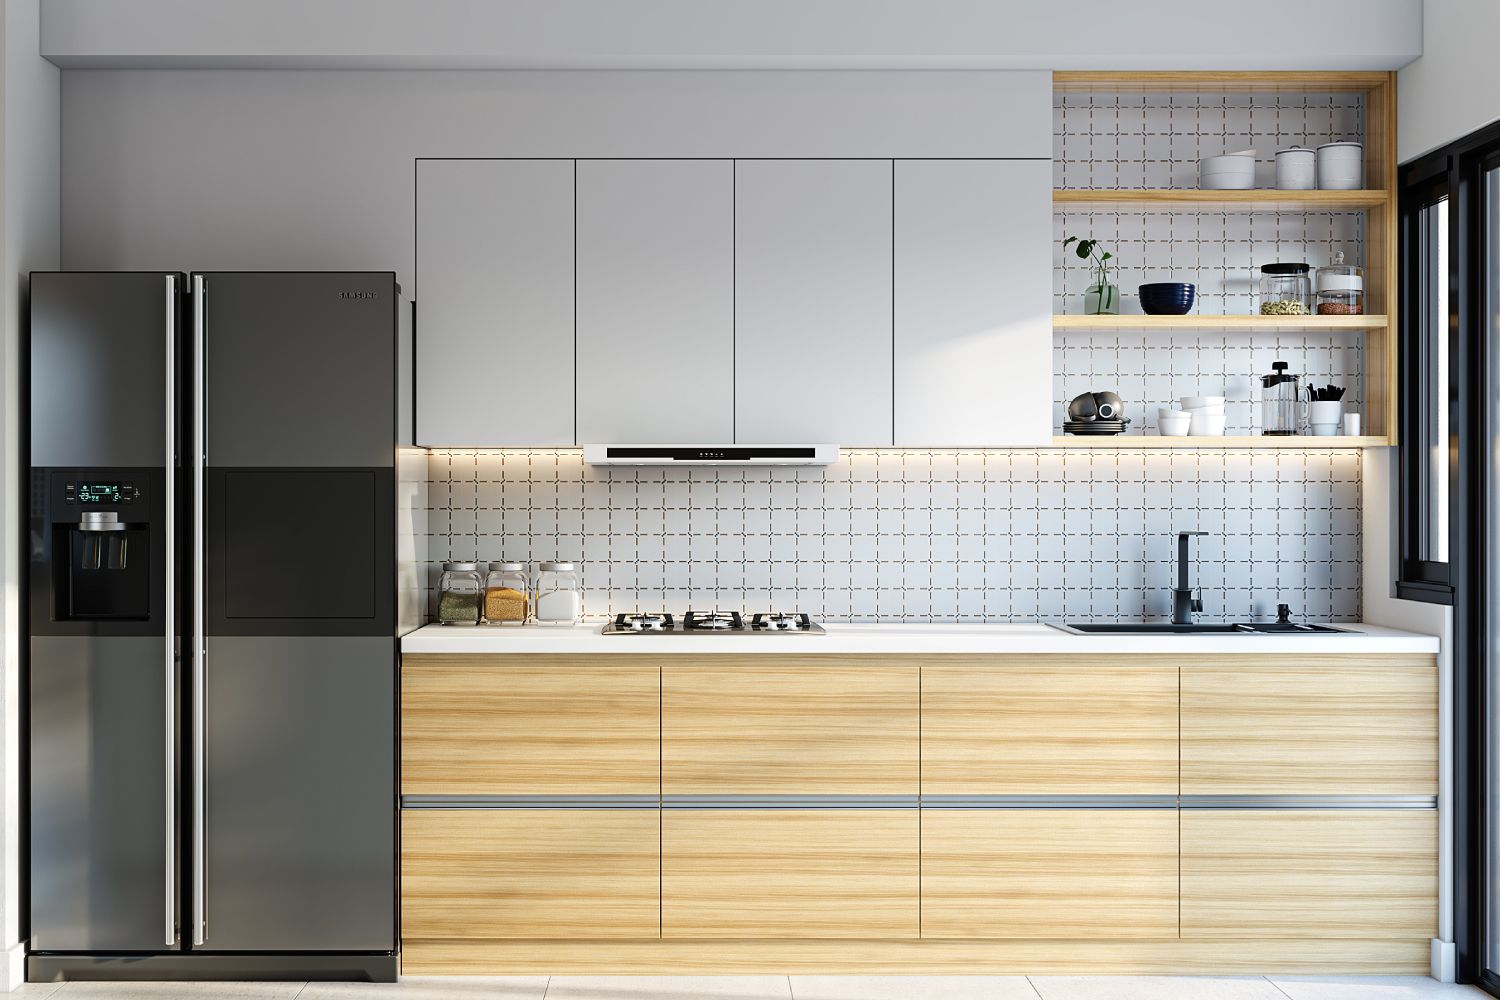 Scandinavian White And Wood Modular Kitchen Cabinet Design With White Patterned Backsplash